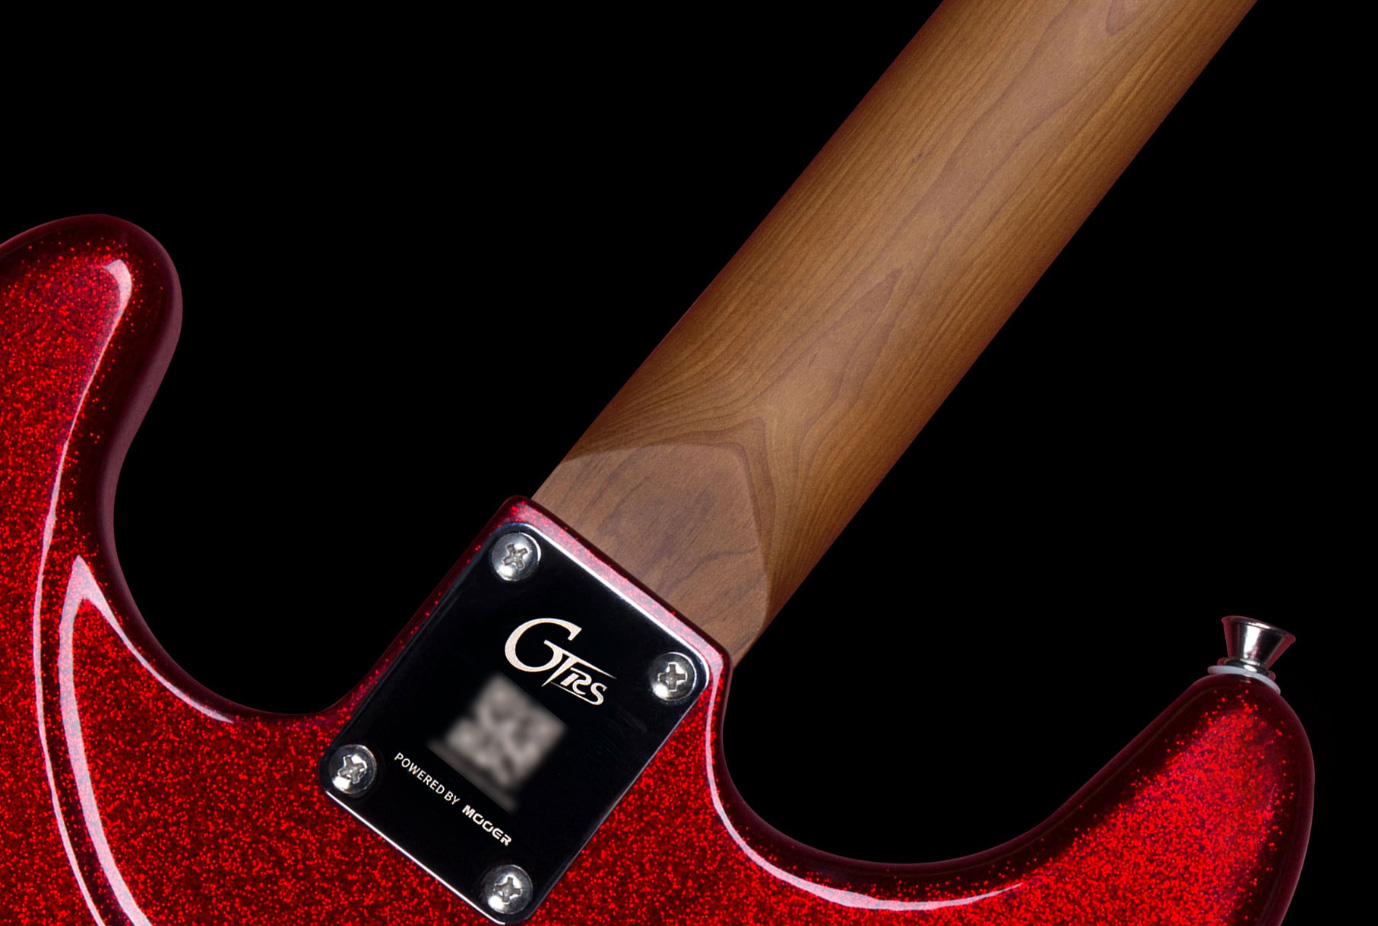 Mooer Gtrs S800 Hss Trem Rw - Metal Red - MIDI / Digital elektrische gitaar - Variation 2